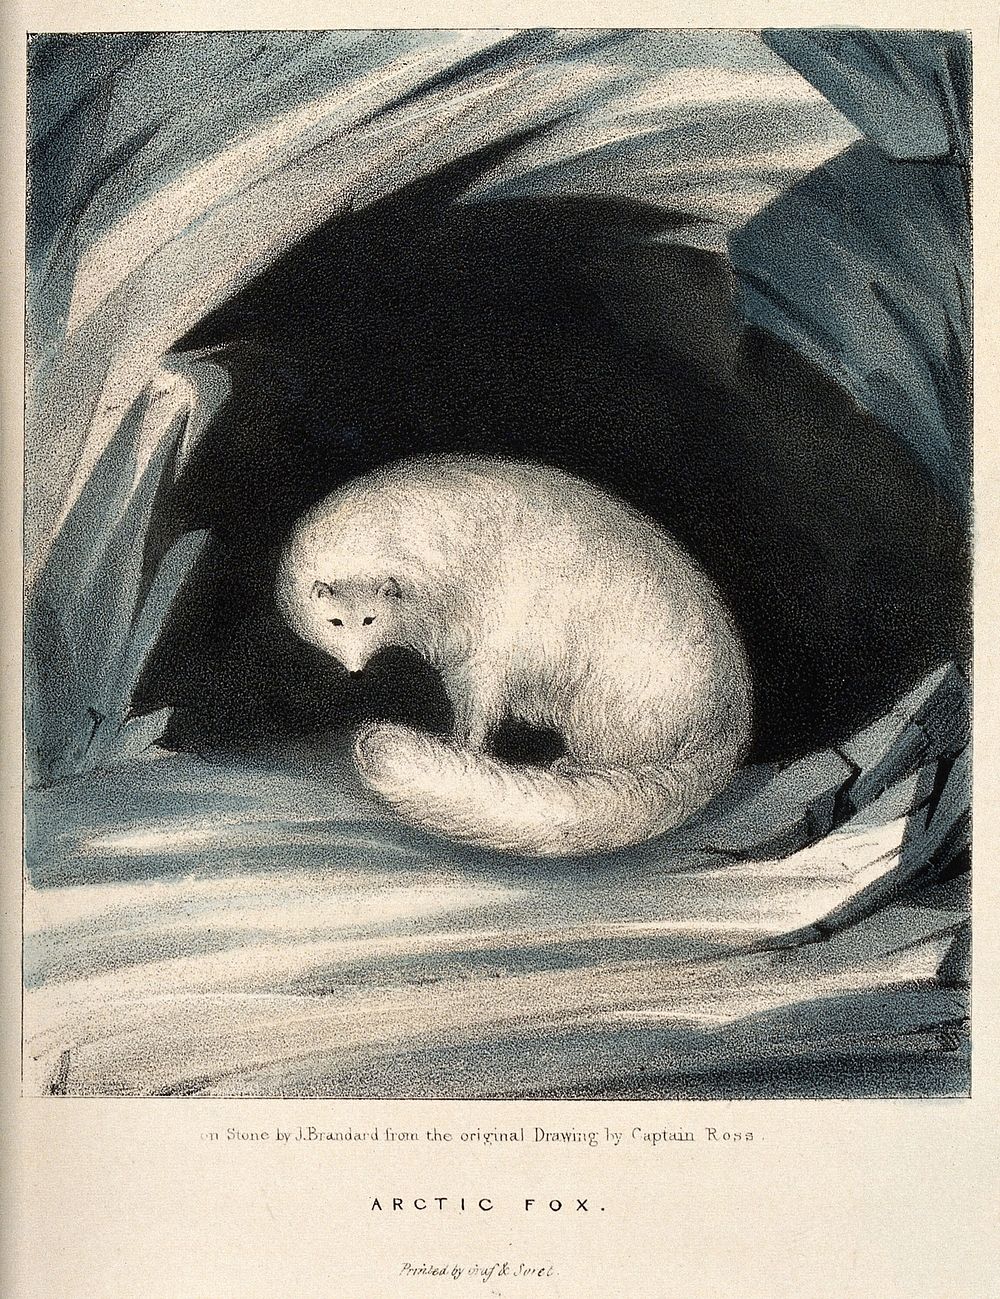 An arctic fox. Colour lithograph by J Brandard after Captain Ross.